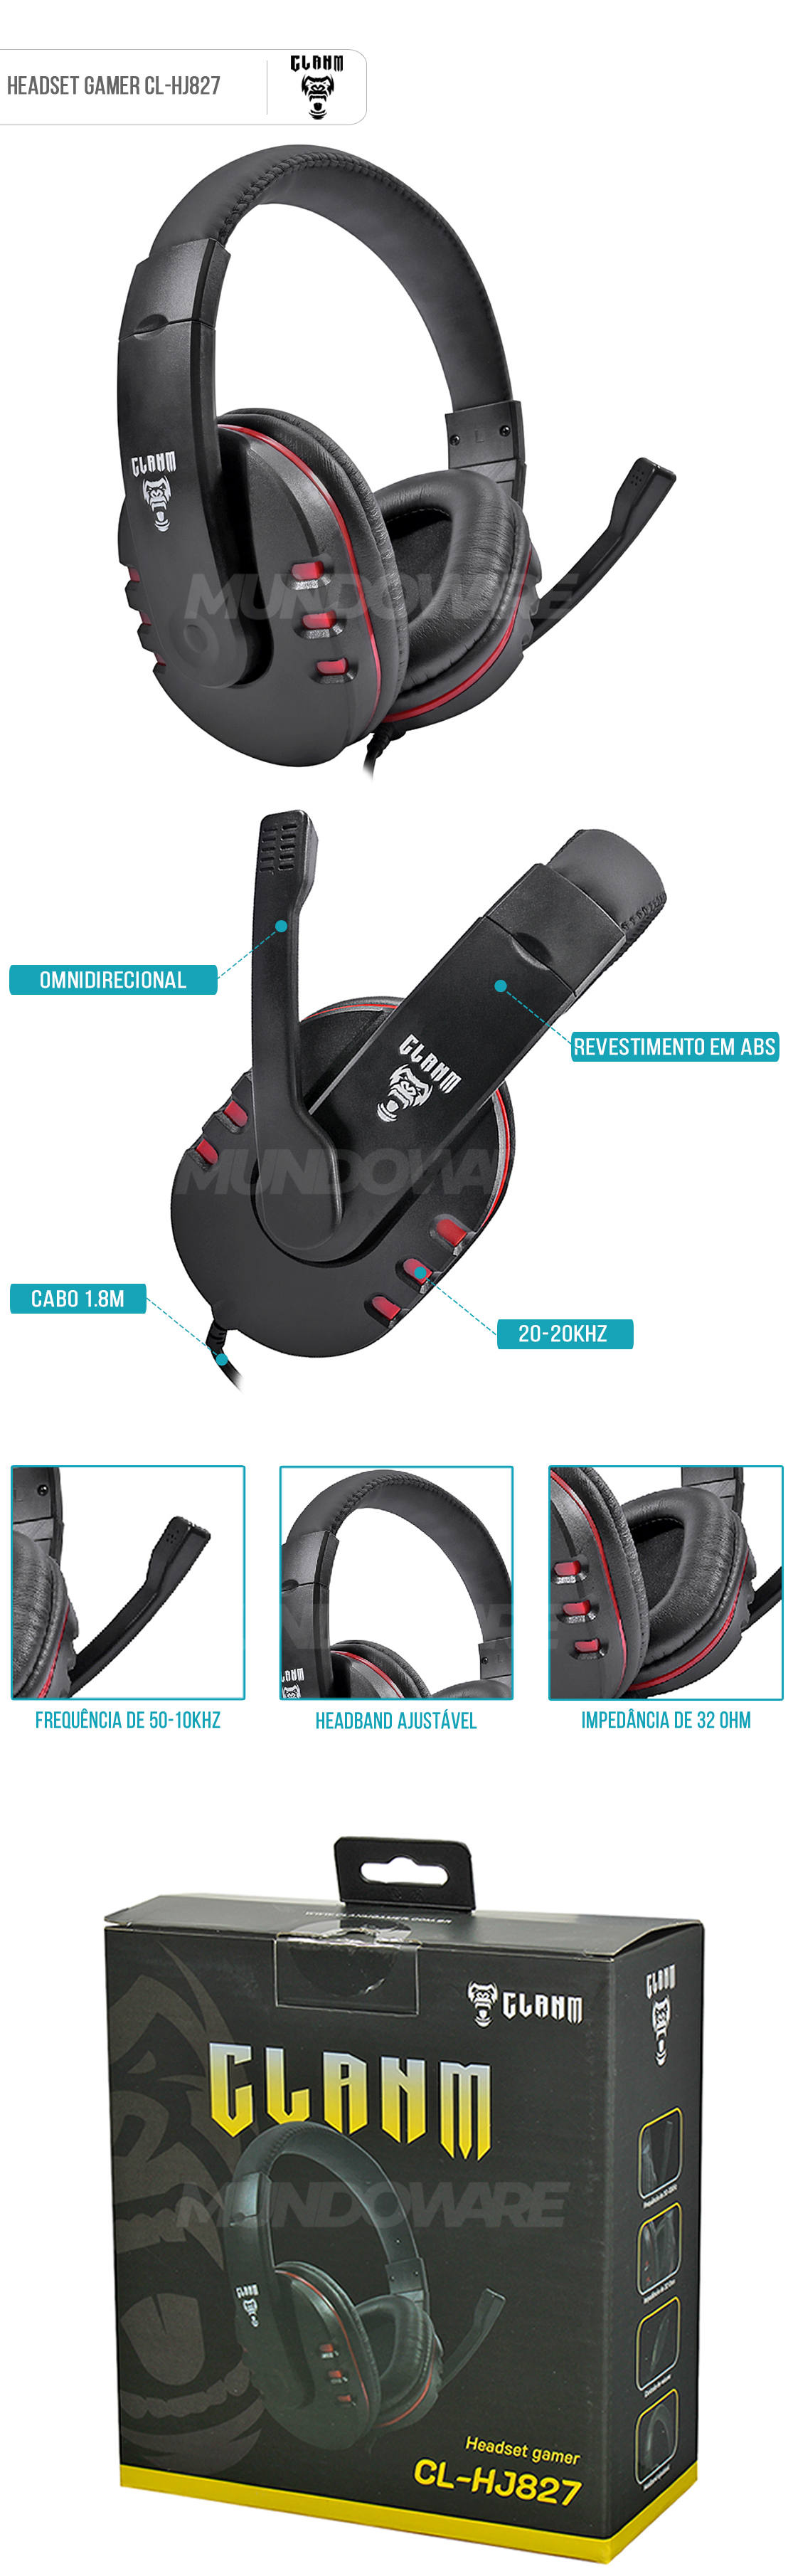 Headset Gamer Stereo Microfone Ominidirecional Cabo 1.8m Fone Clanm CL-HJ827 Preto com Vermelho